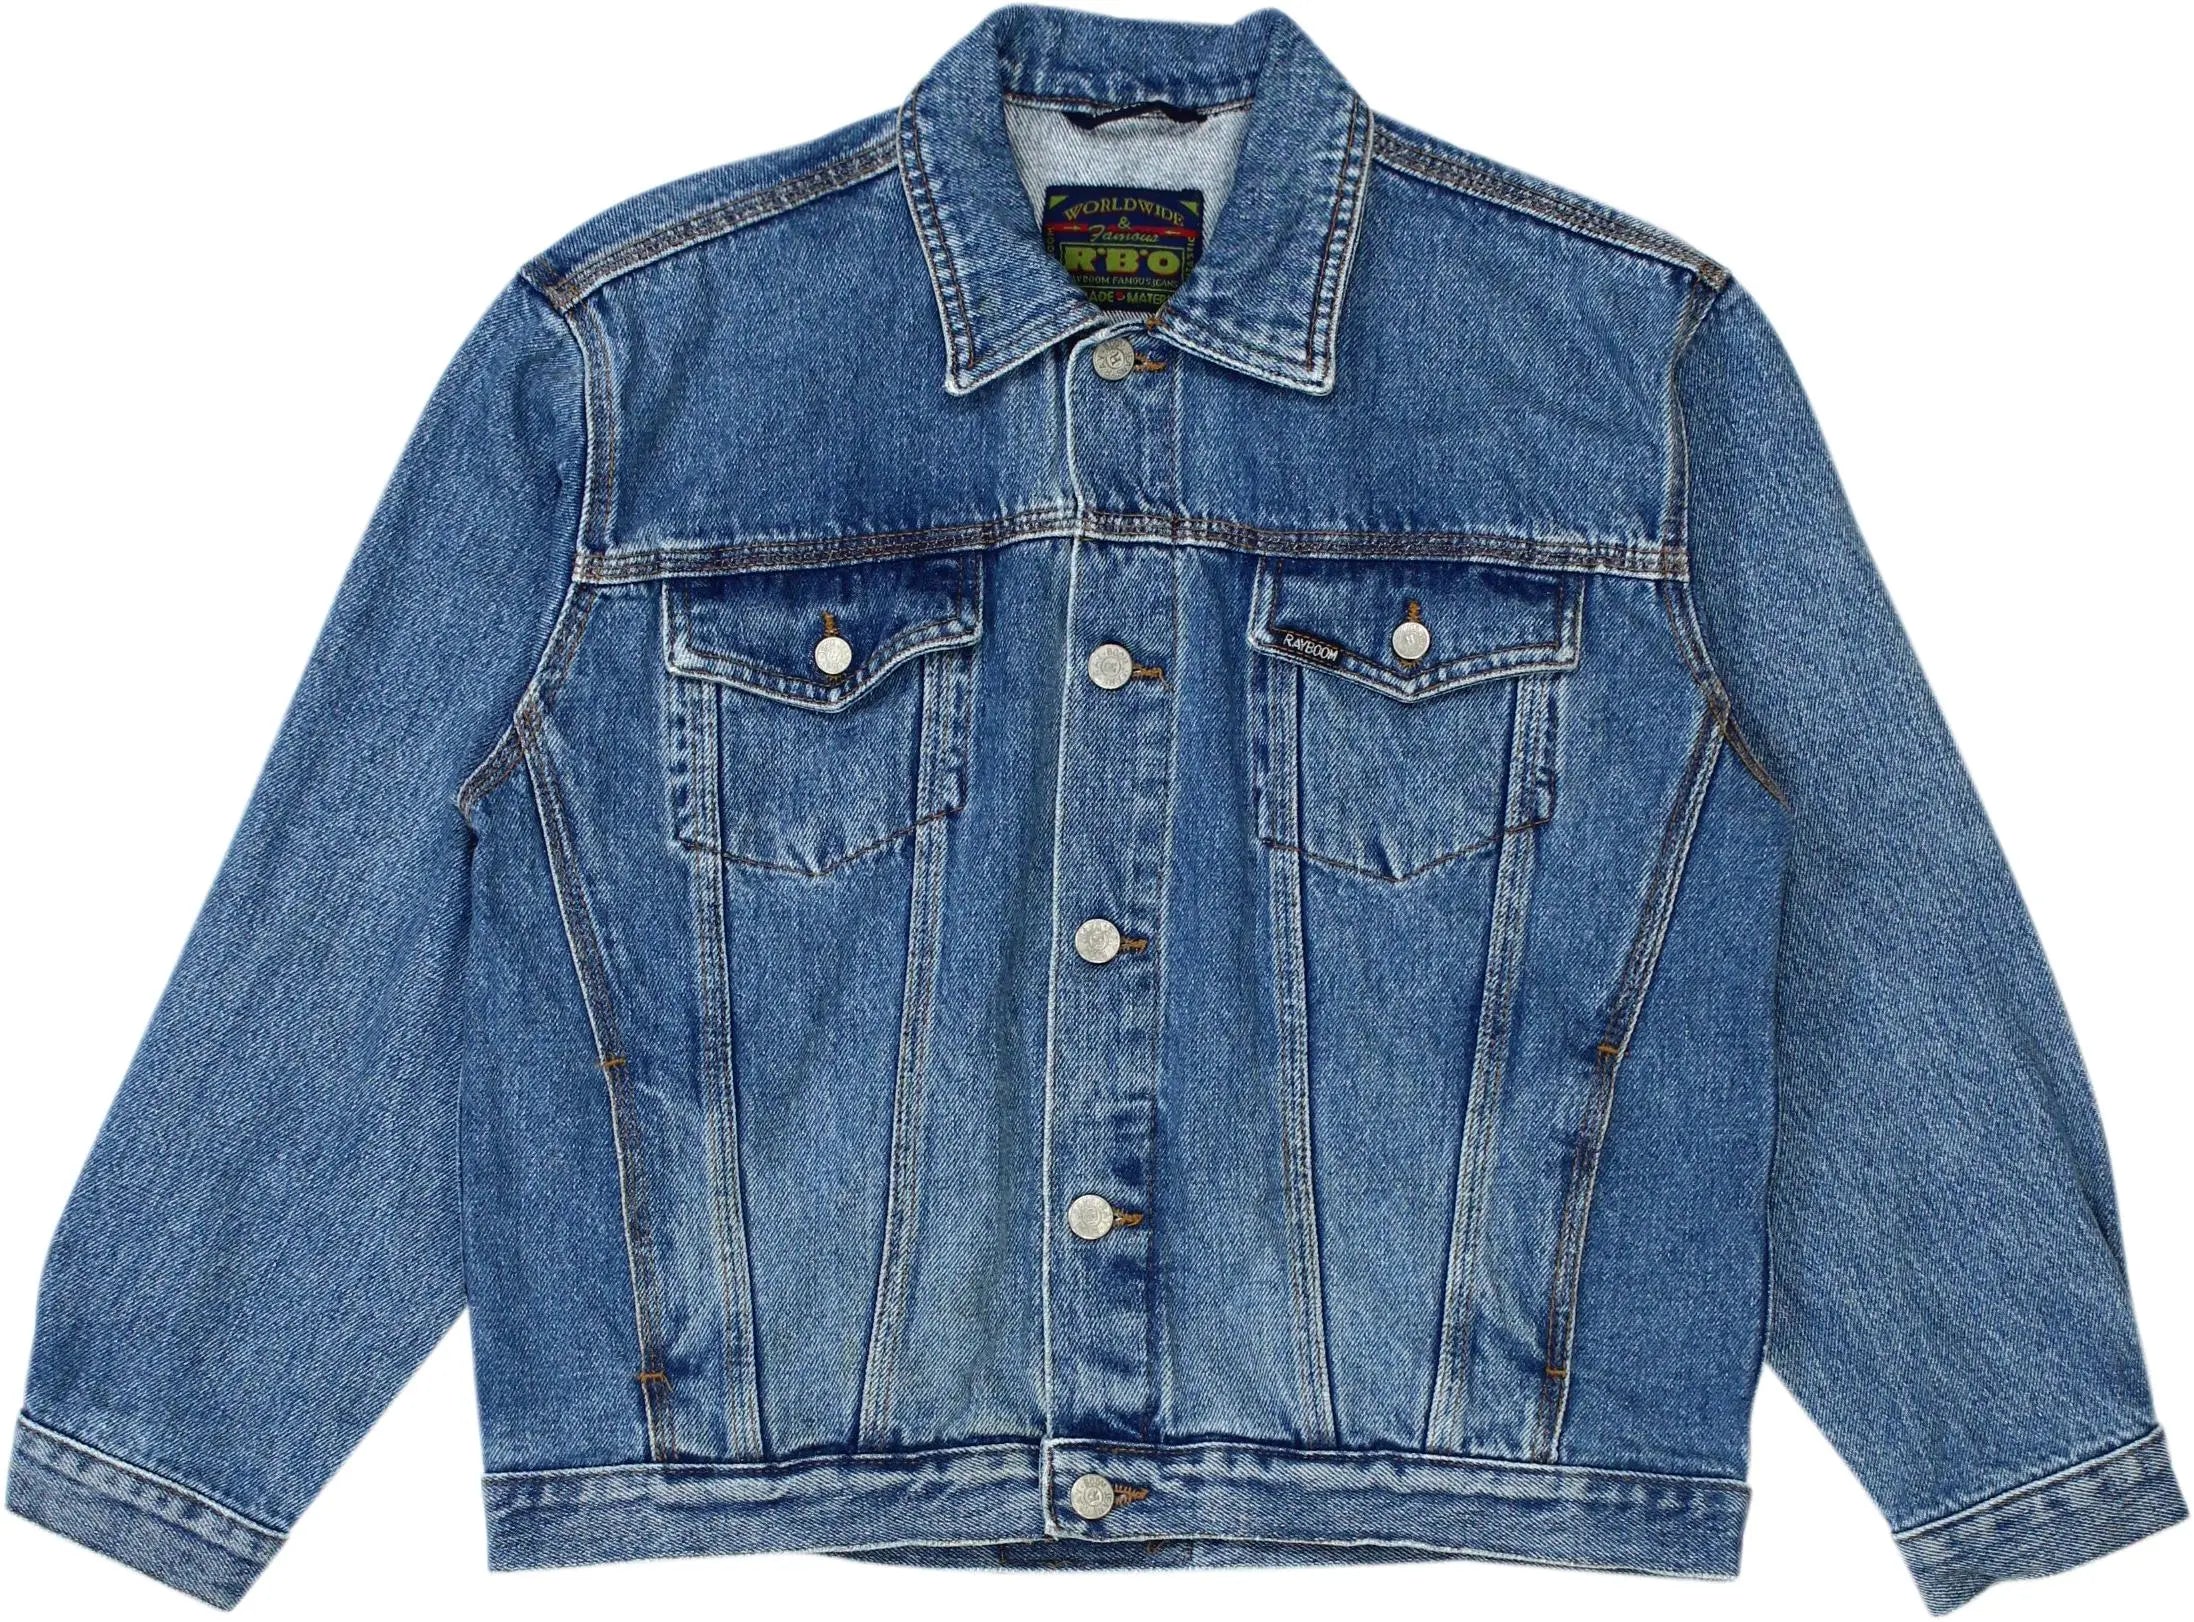 Rayboom - Blue Denim Jacket- ThriftTale.com - Vintage and second handclothing